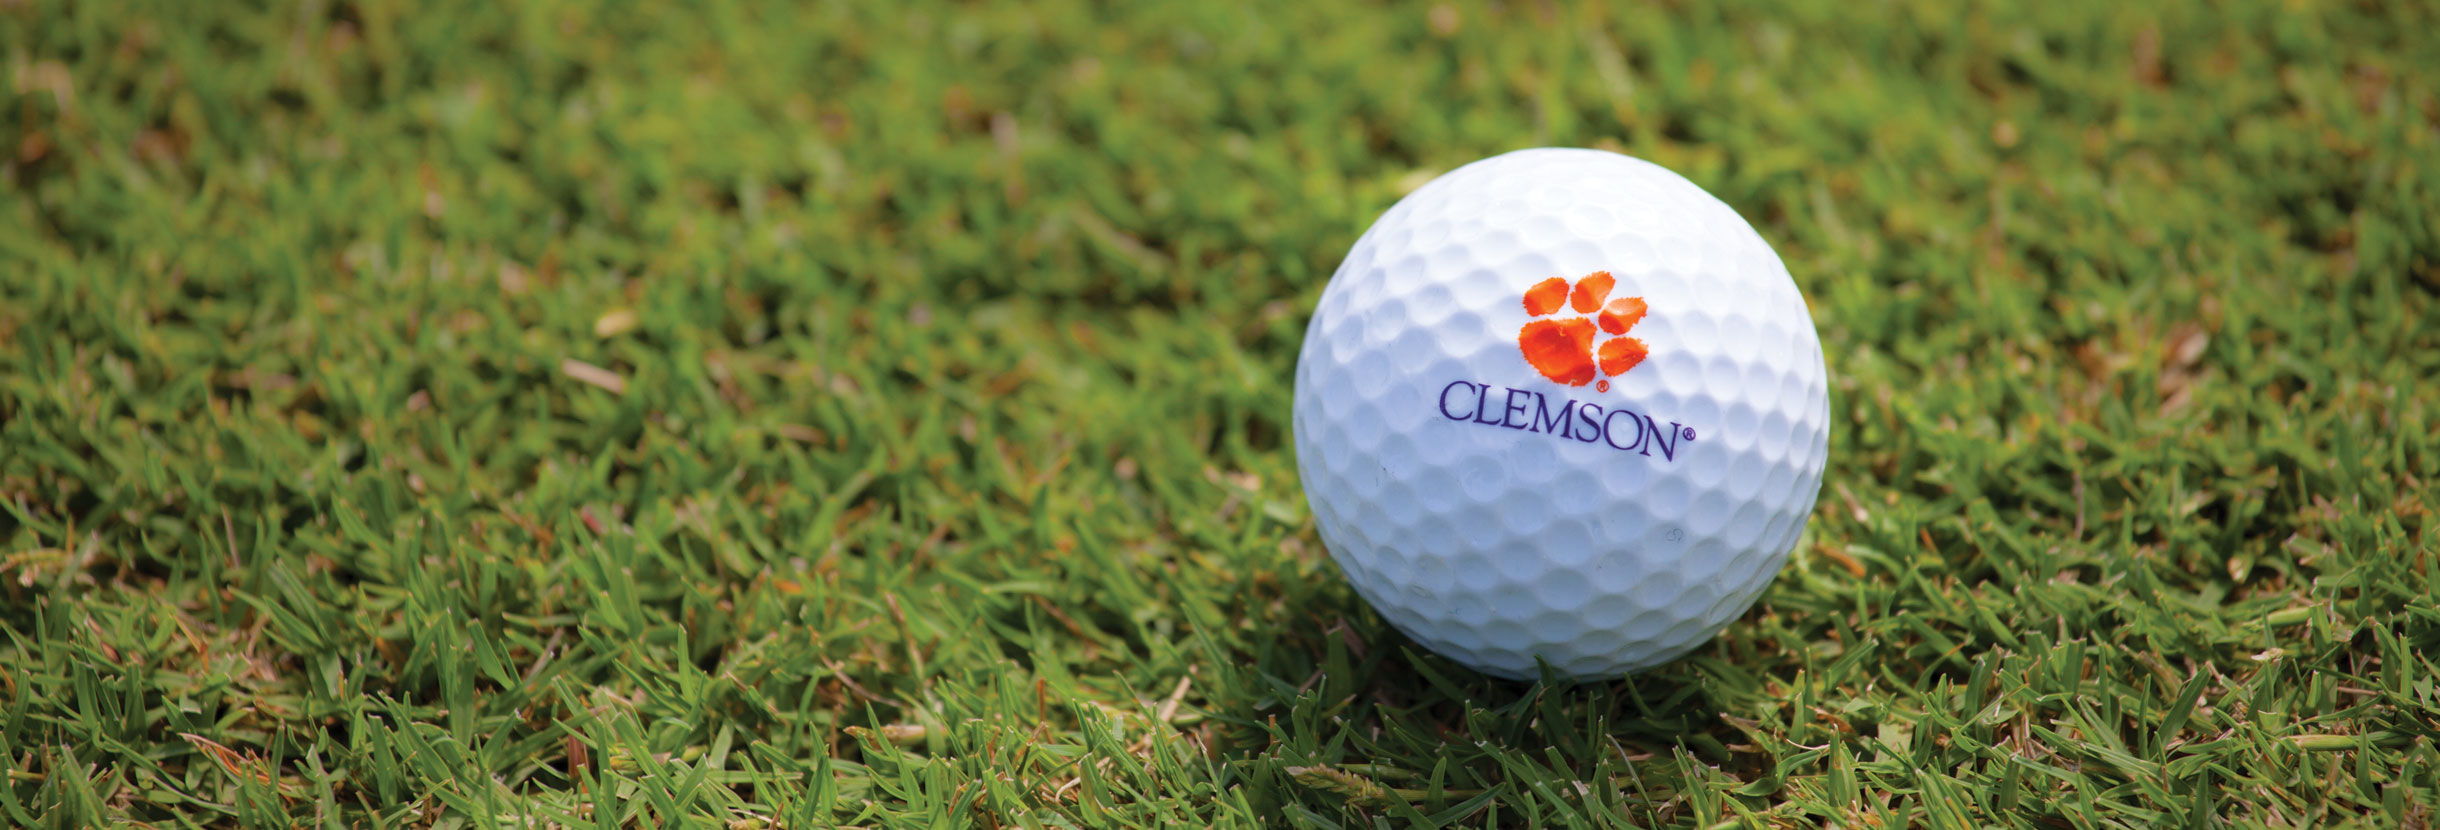 Clemson golf ball sitting on green turf